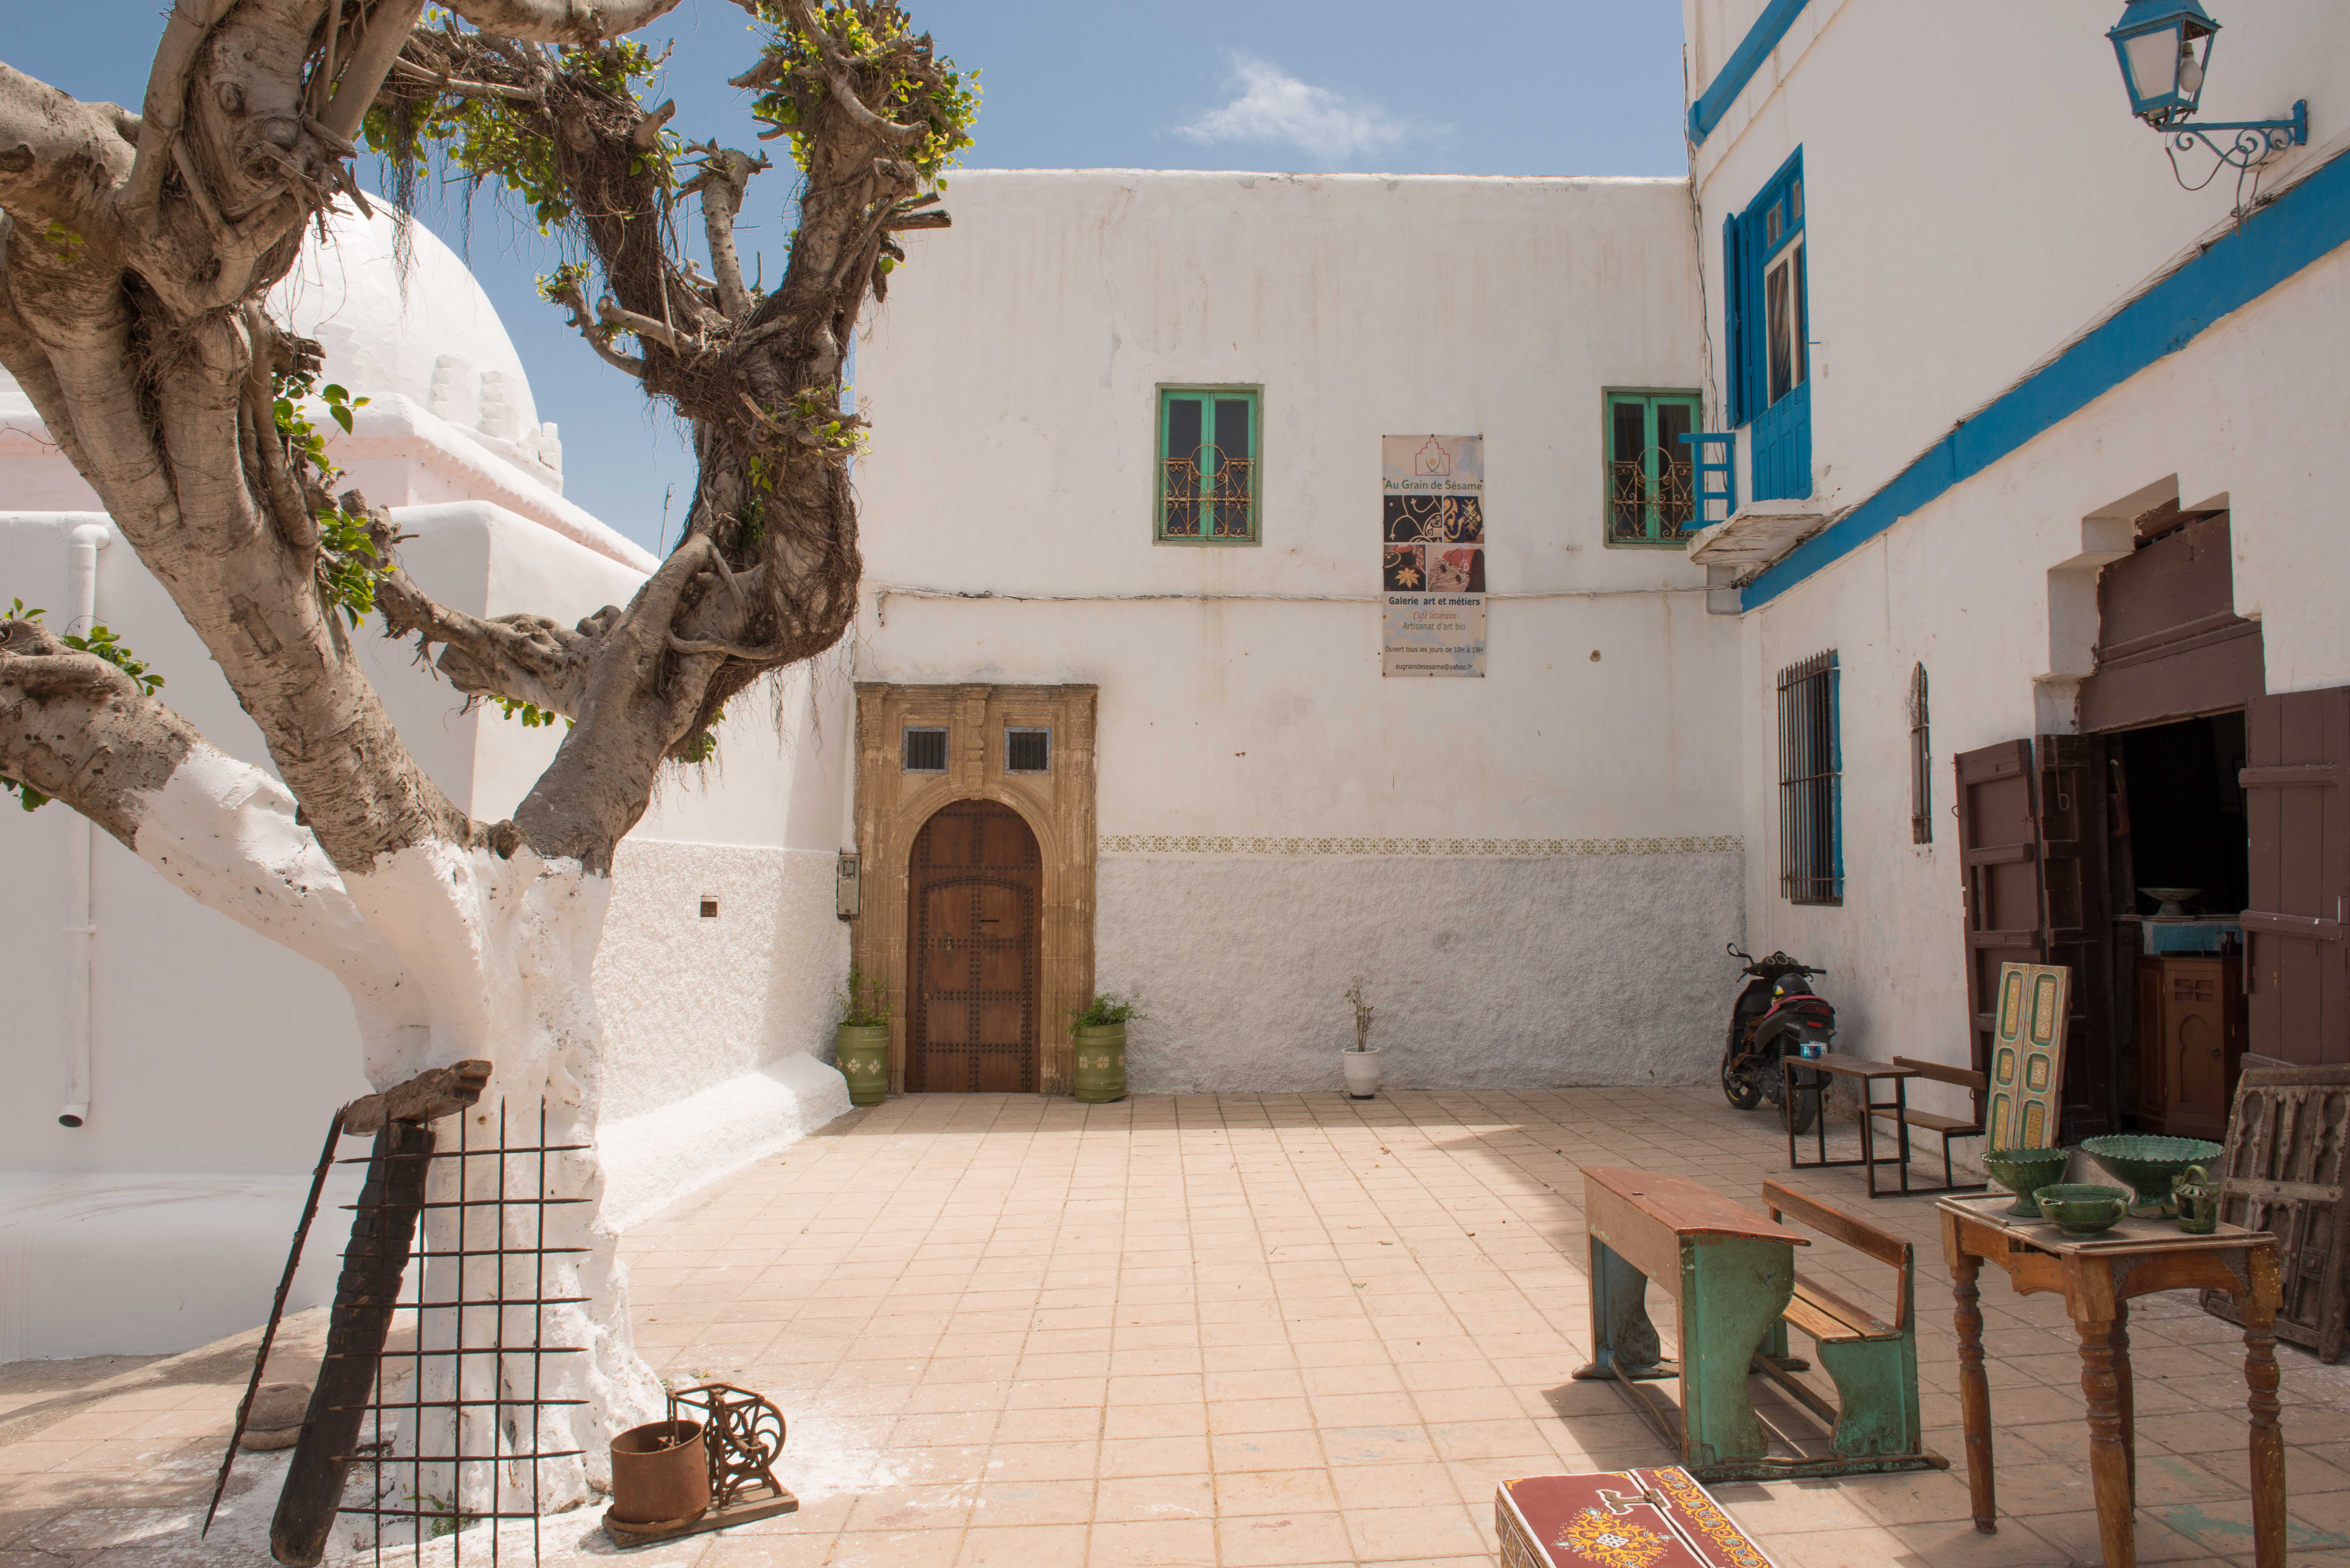 Rabat, Morocco: A Brief Selective Tour. Part I The Kasbah